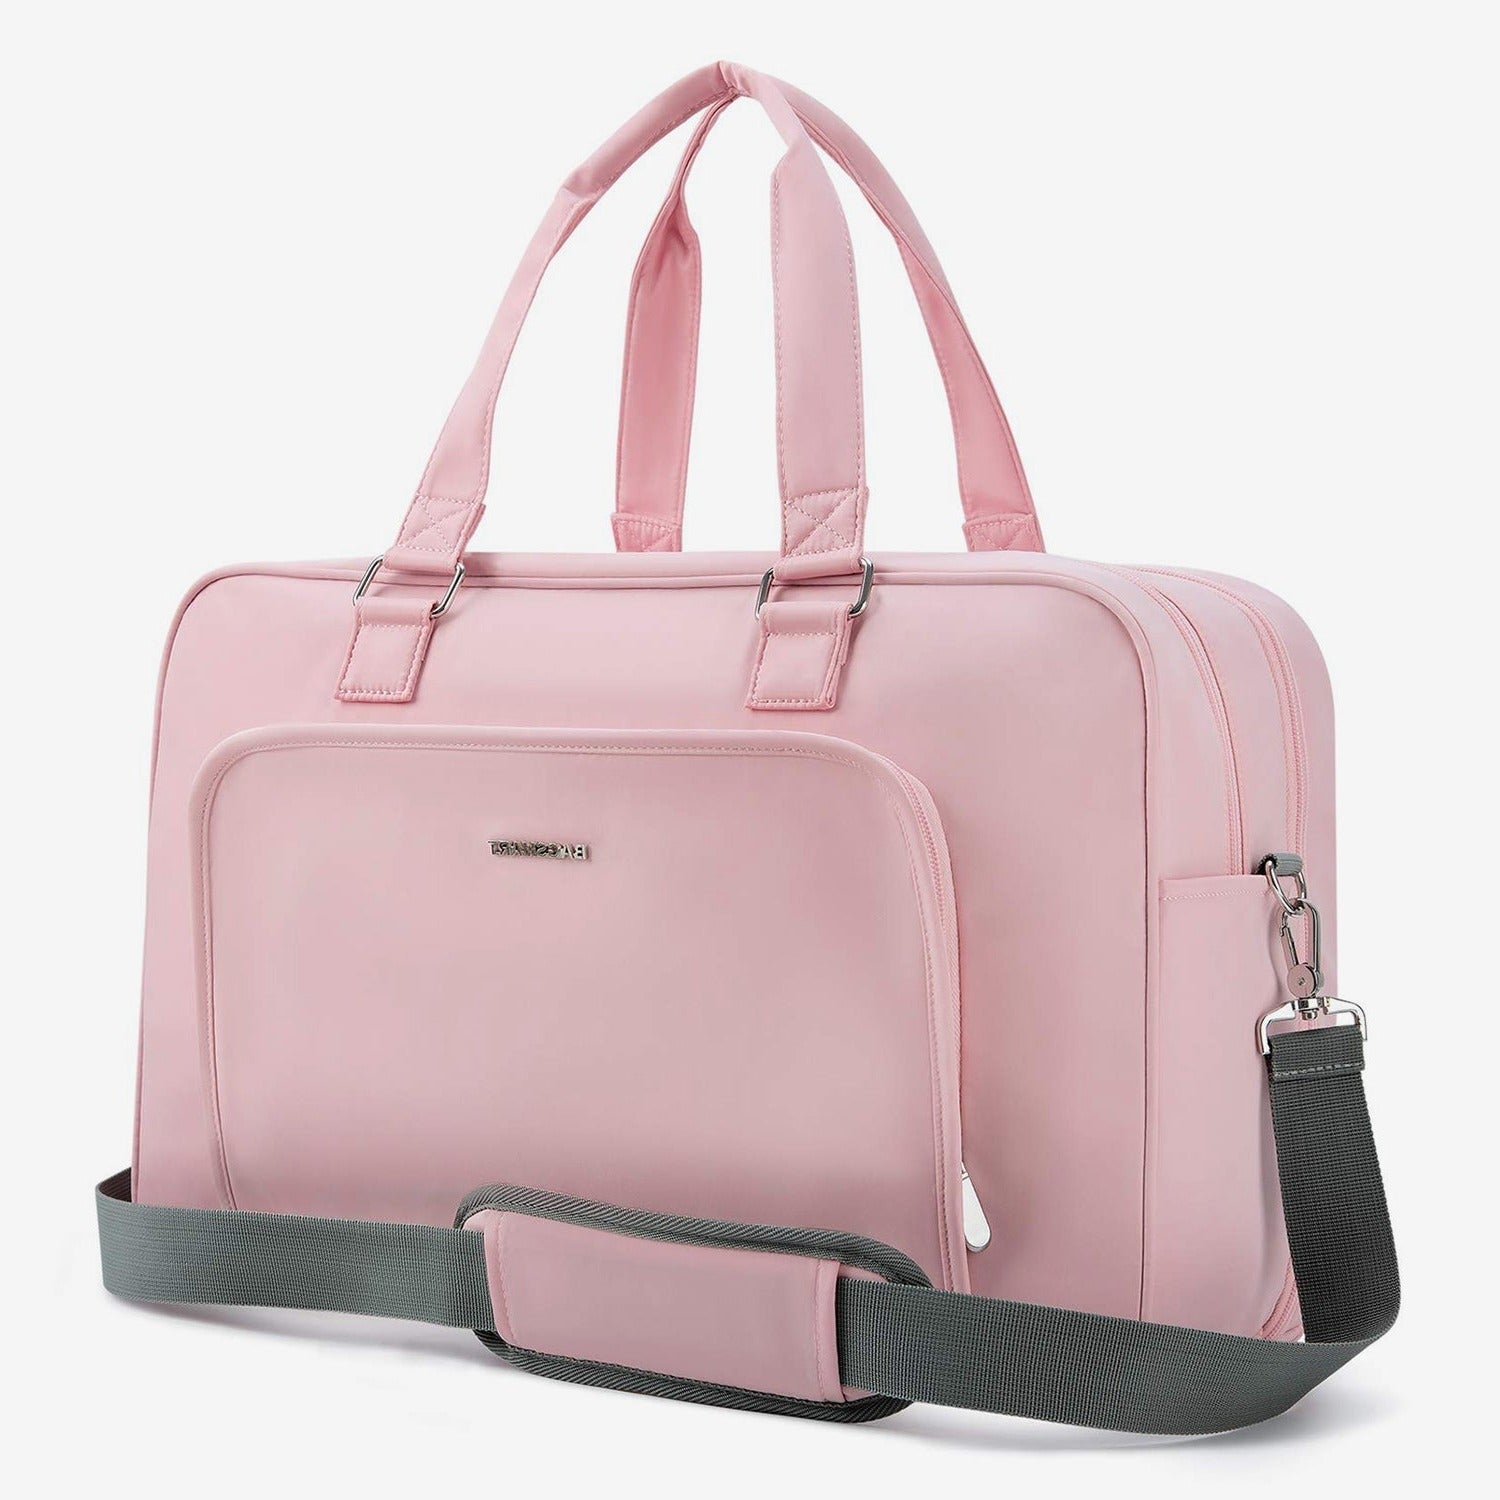 Best Travel Duffel Bag - Carry On Bag | Bagsmart Australia – BAGSMART.AU